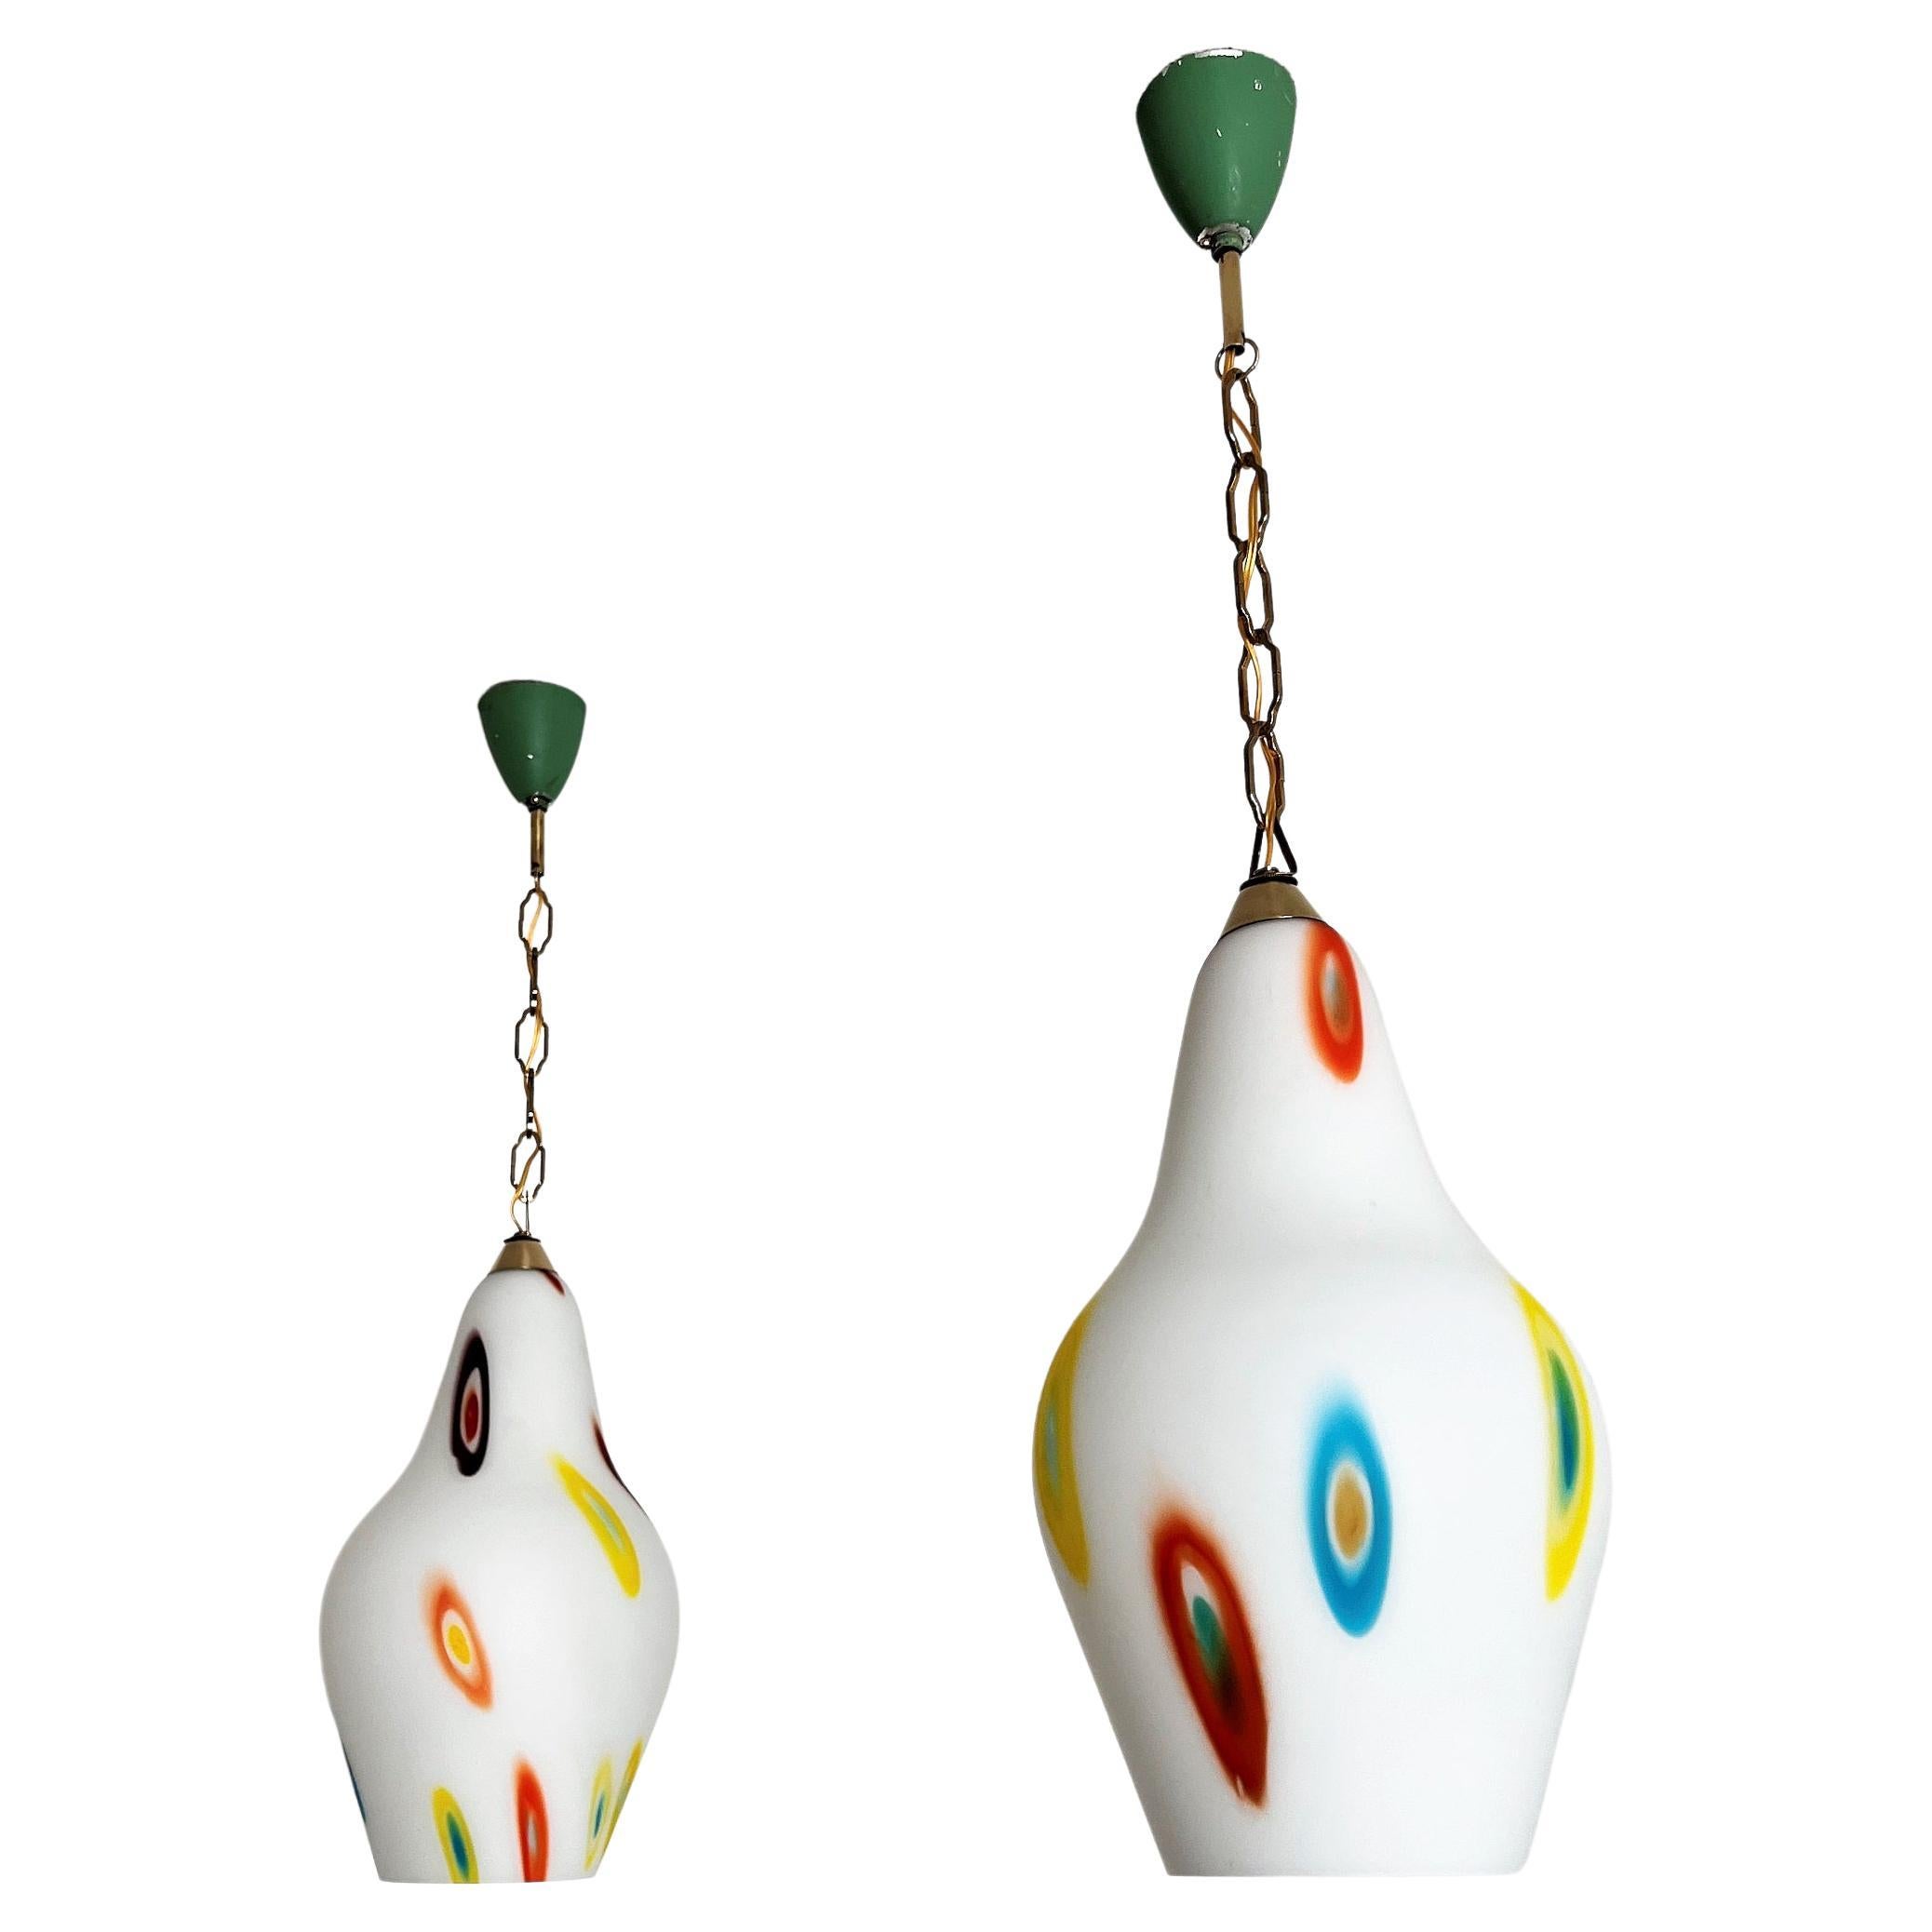 Italian Midcentury Murano Glass Pendant Lights with Colorful Murrine, 1970s For Sale